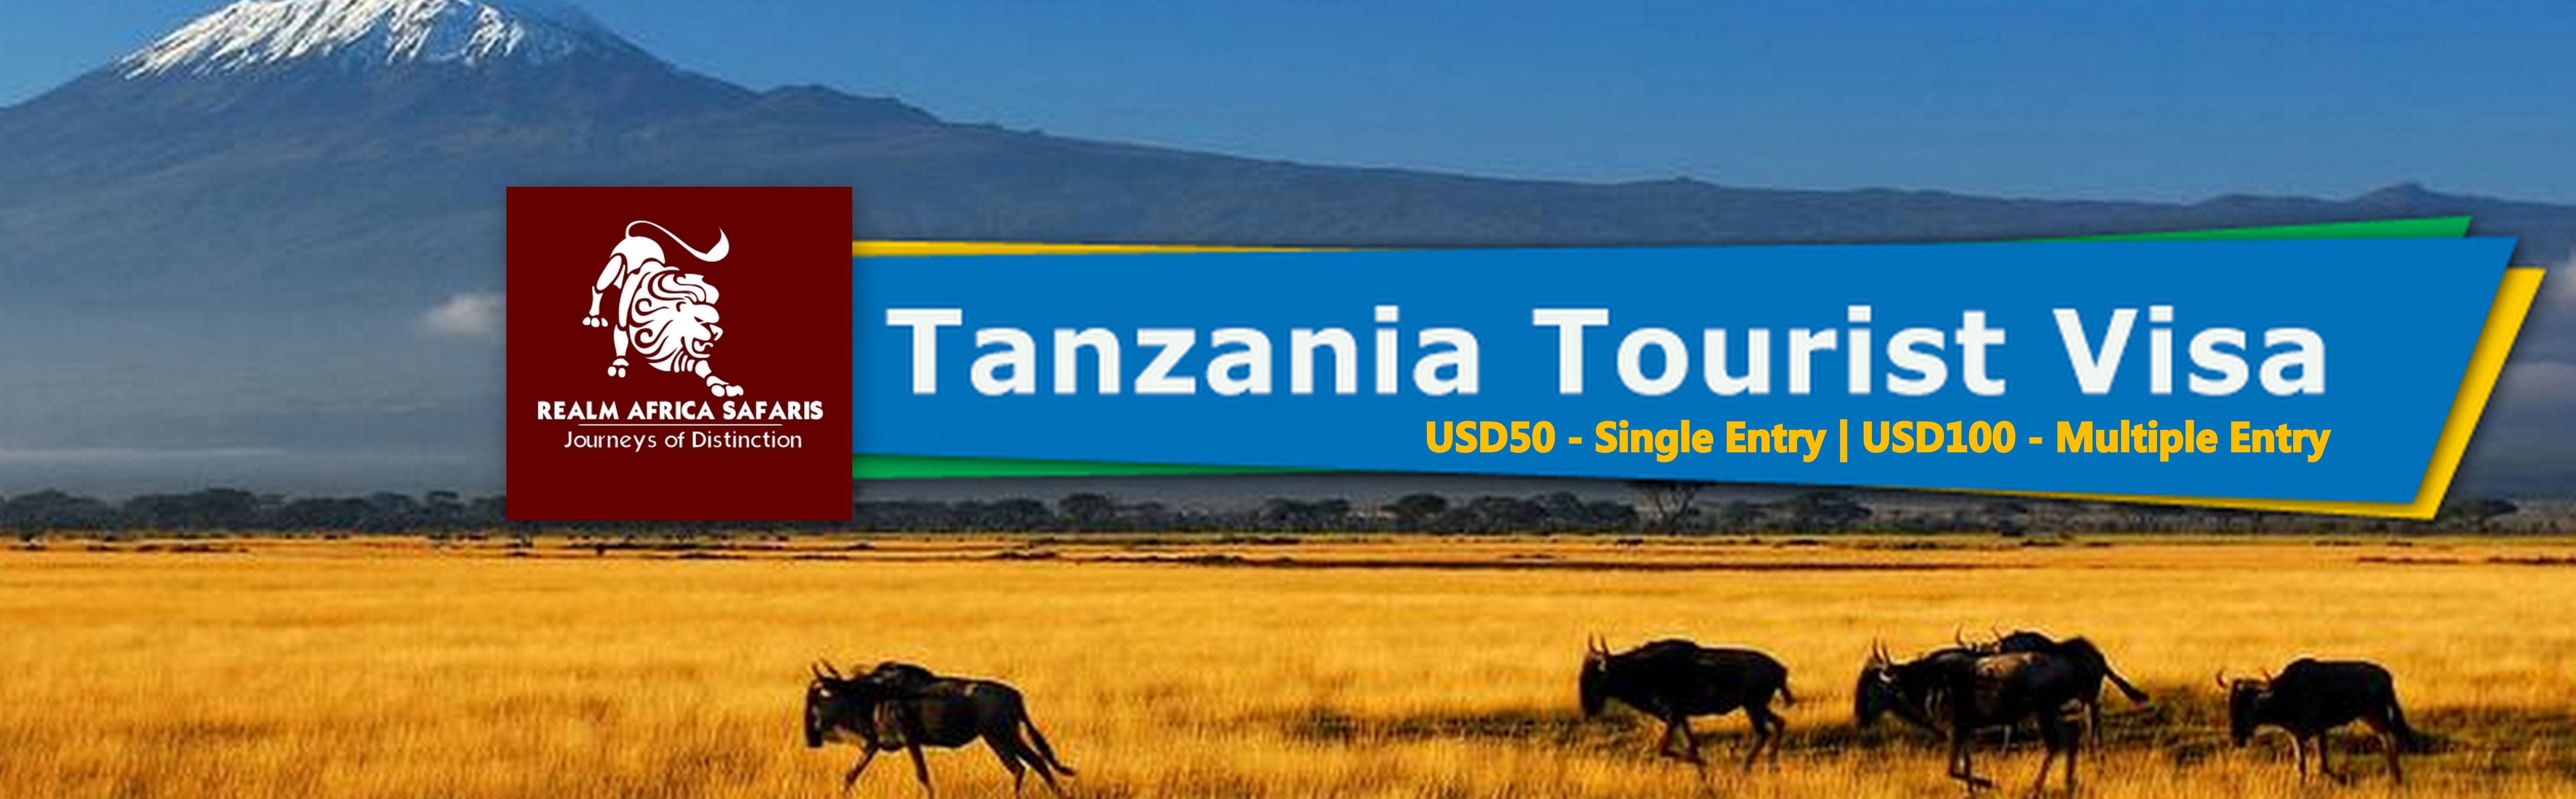 tourist visa application tanzania